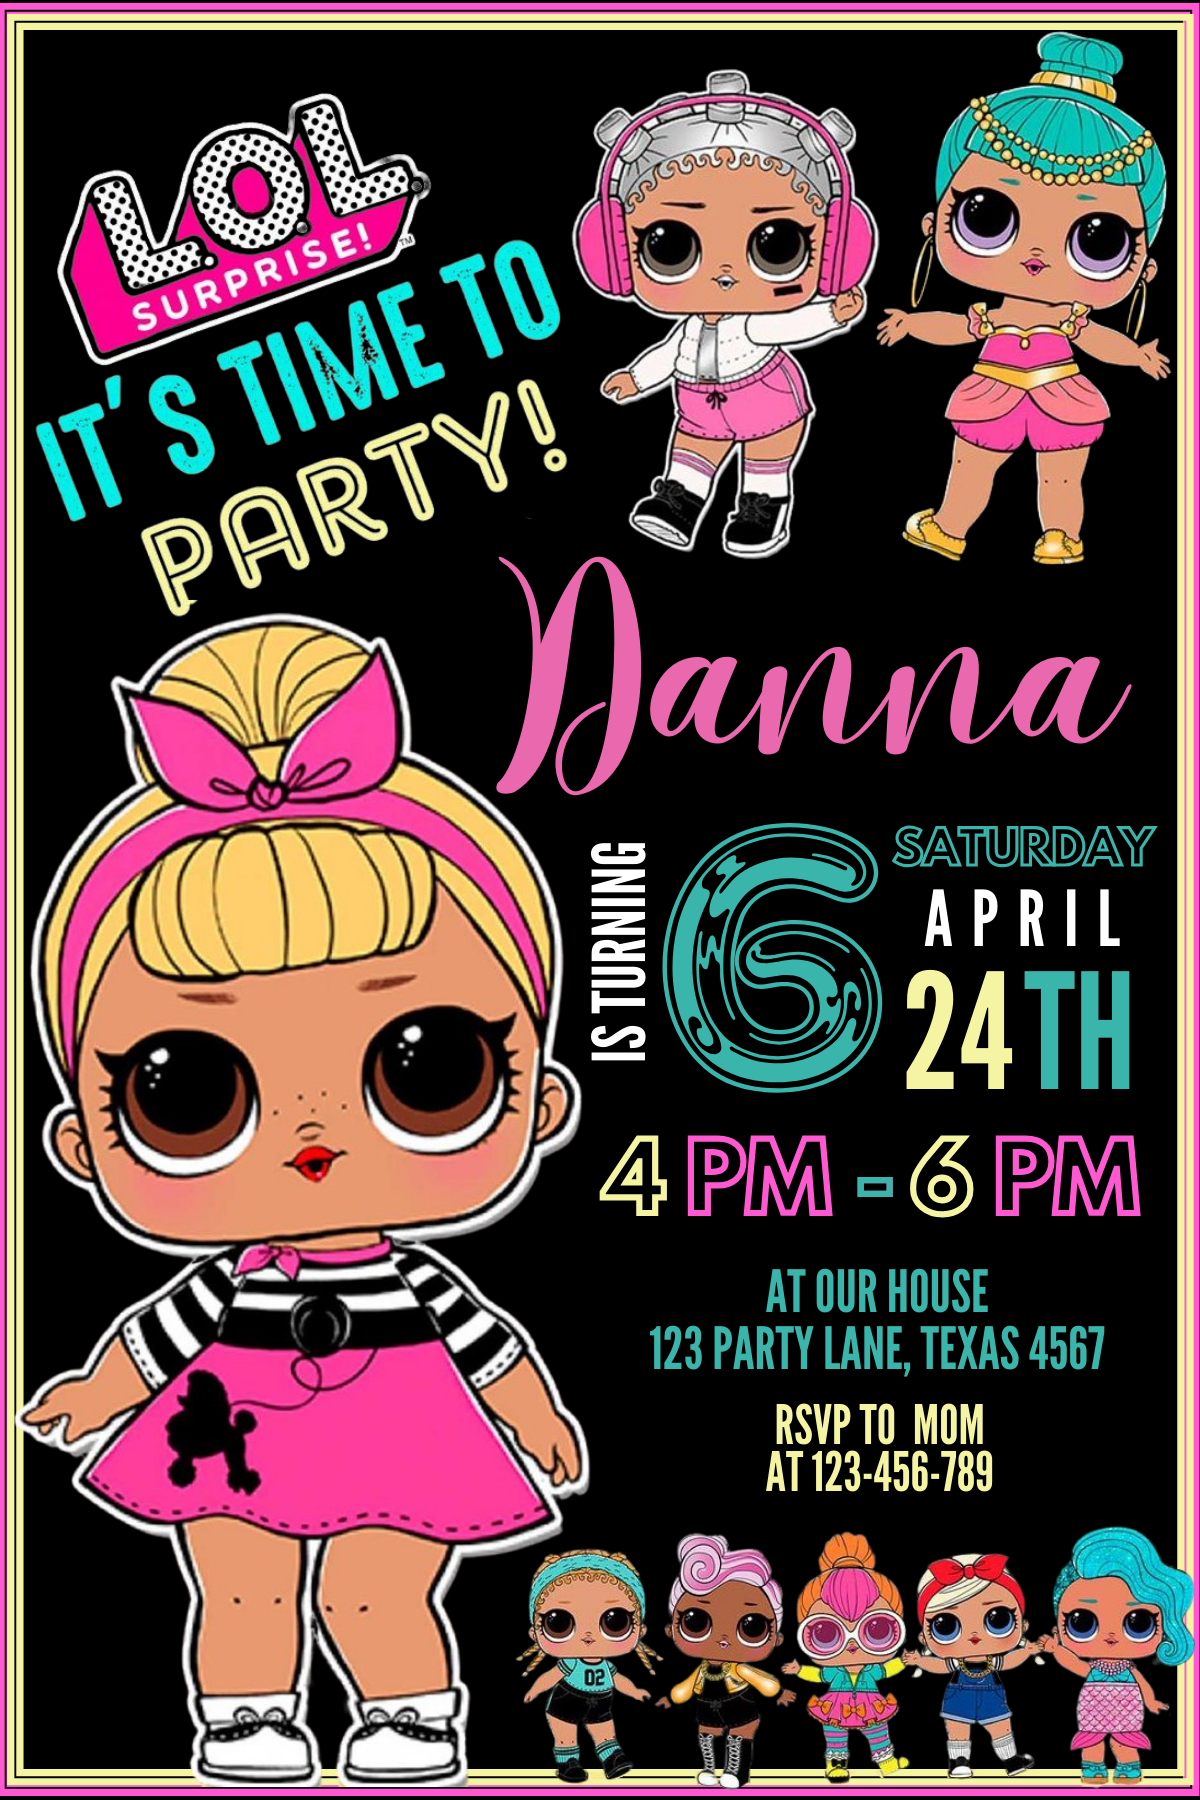 Doll Birthday Digital Invitation, Cute Dolls Birthday Cards, Editable Baby  Doll Birthday Invitation, Girl Birthday Pink Invitation 